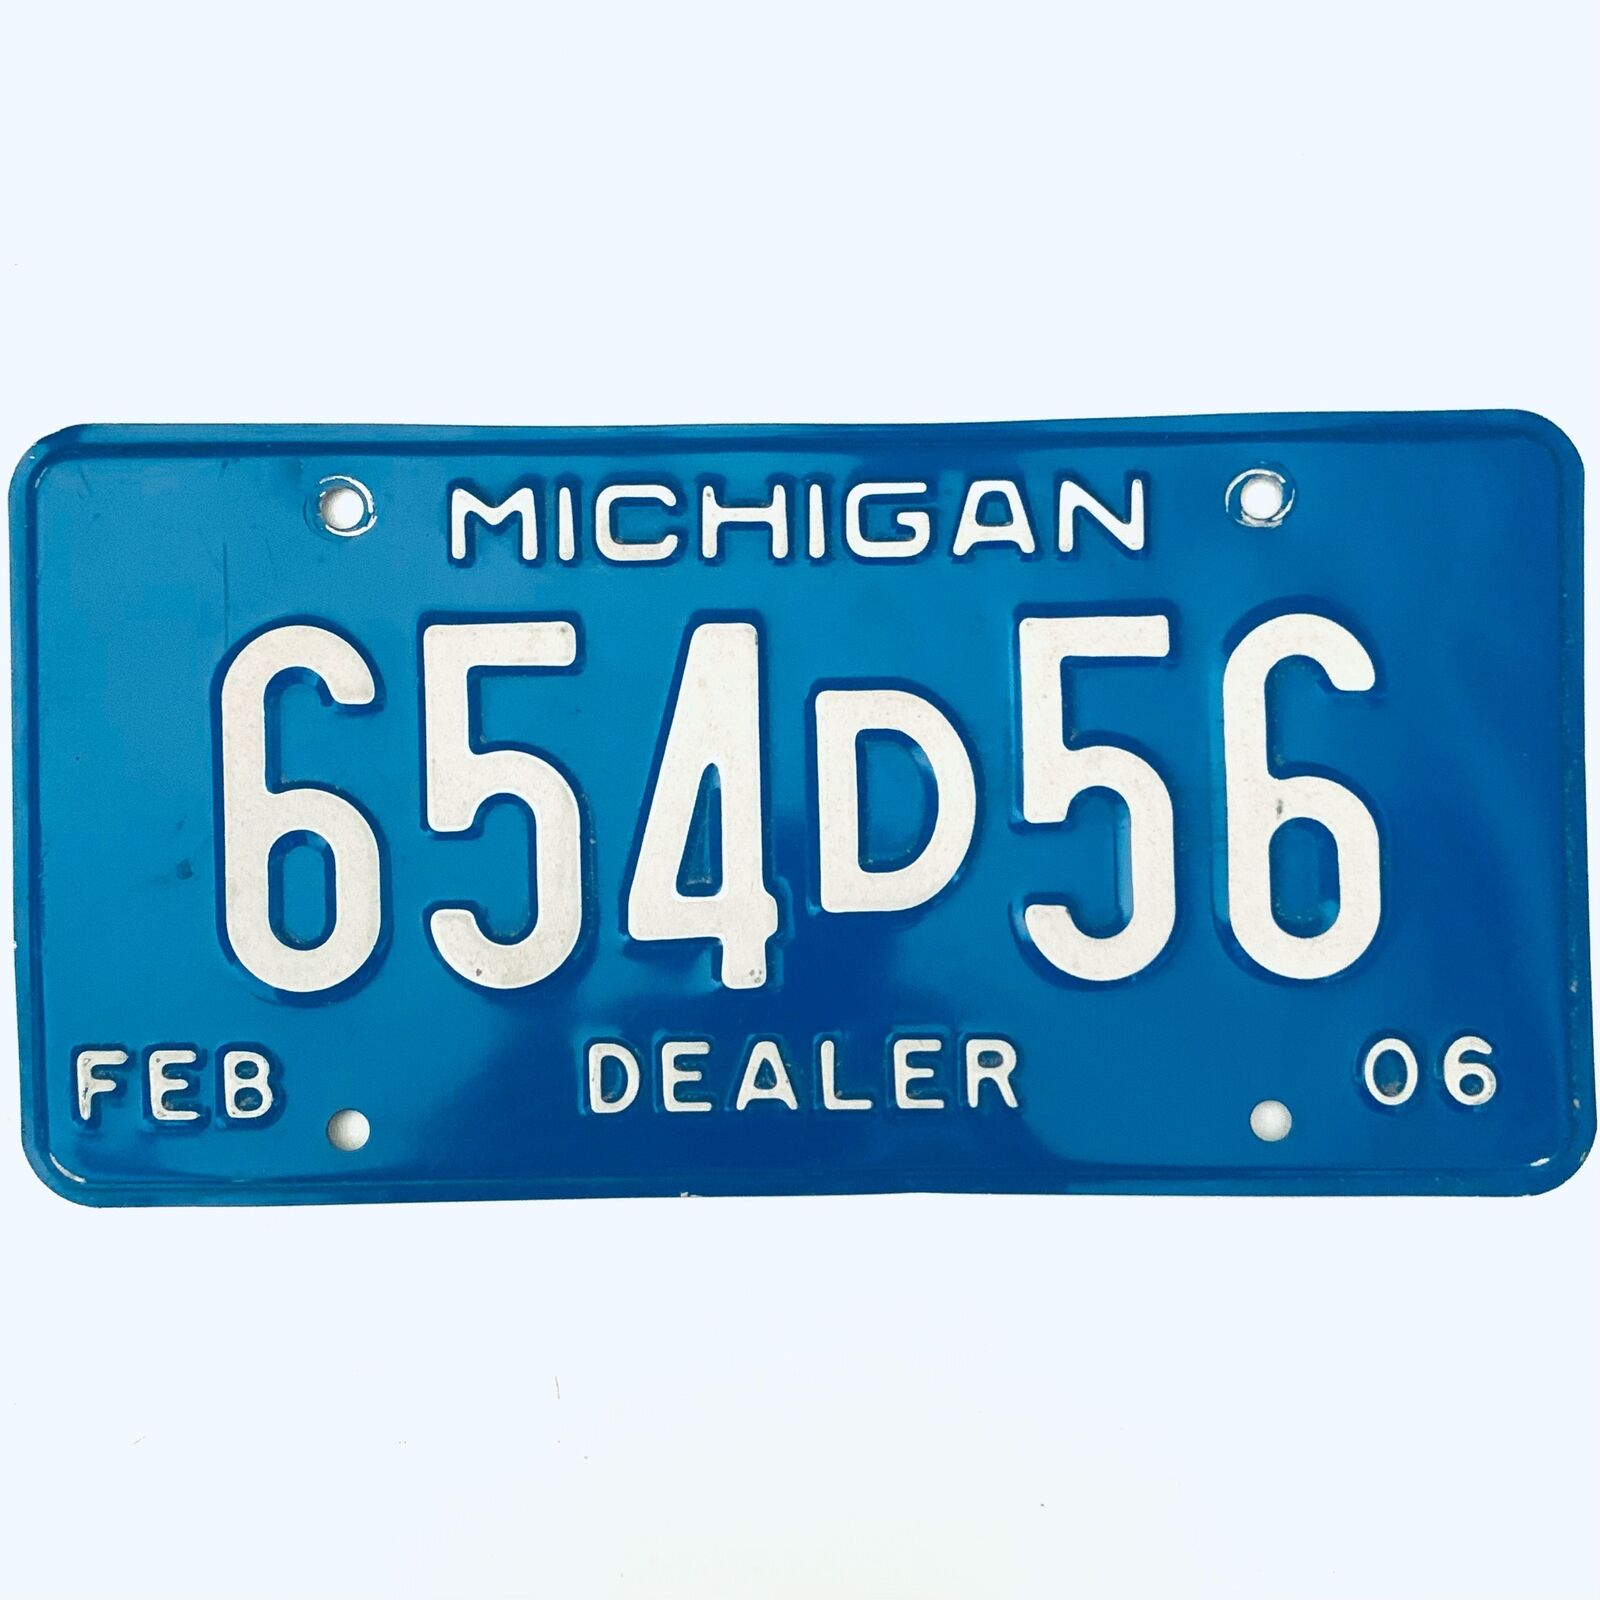 2006 United States Michigan Base Dealer License Plate 654d56